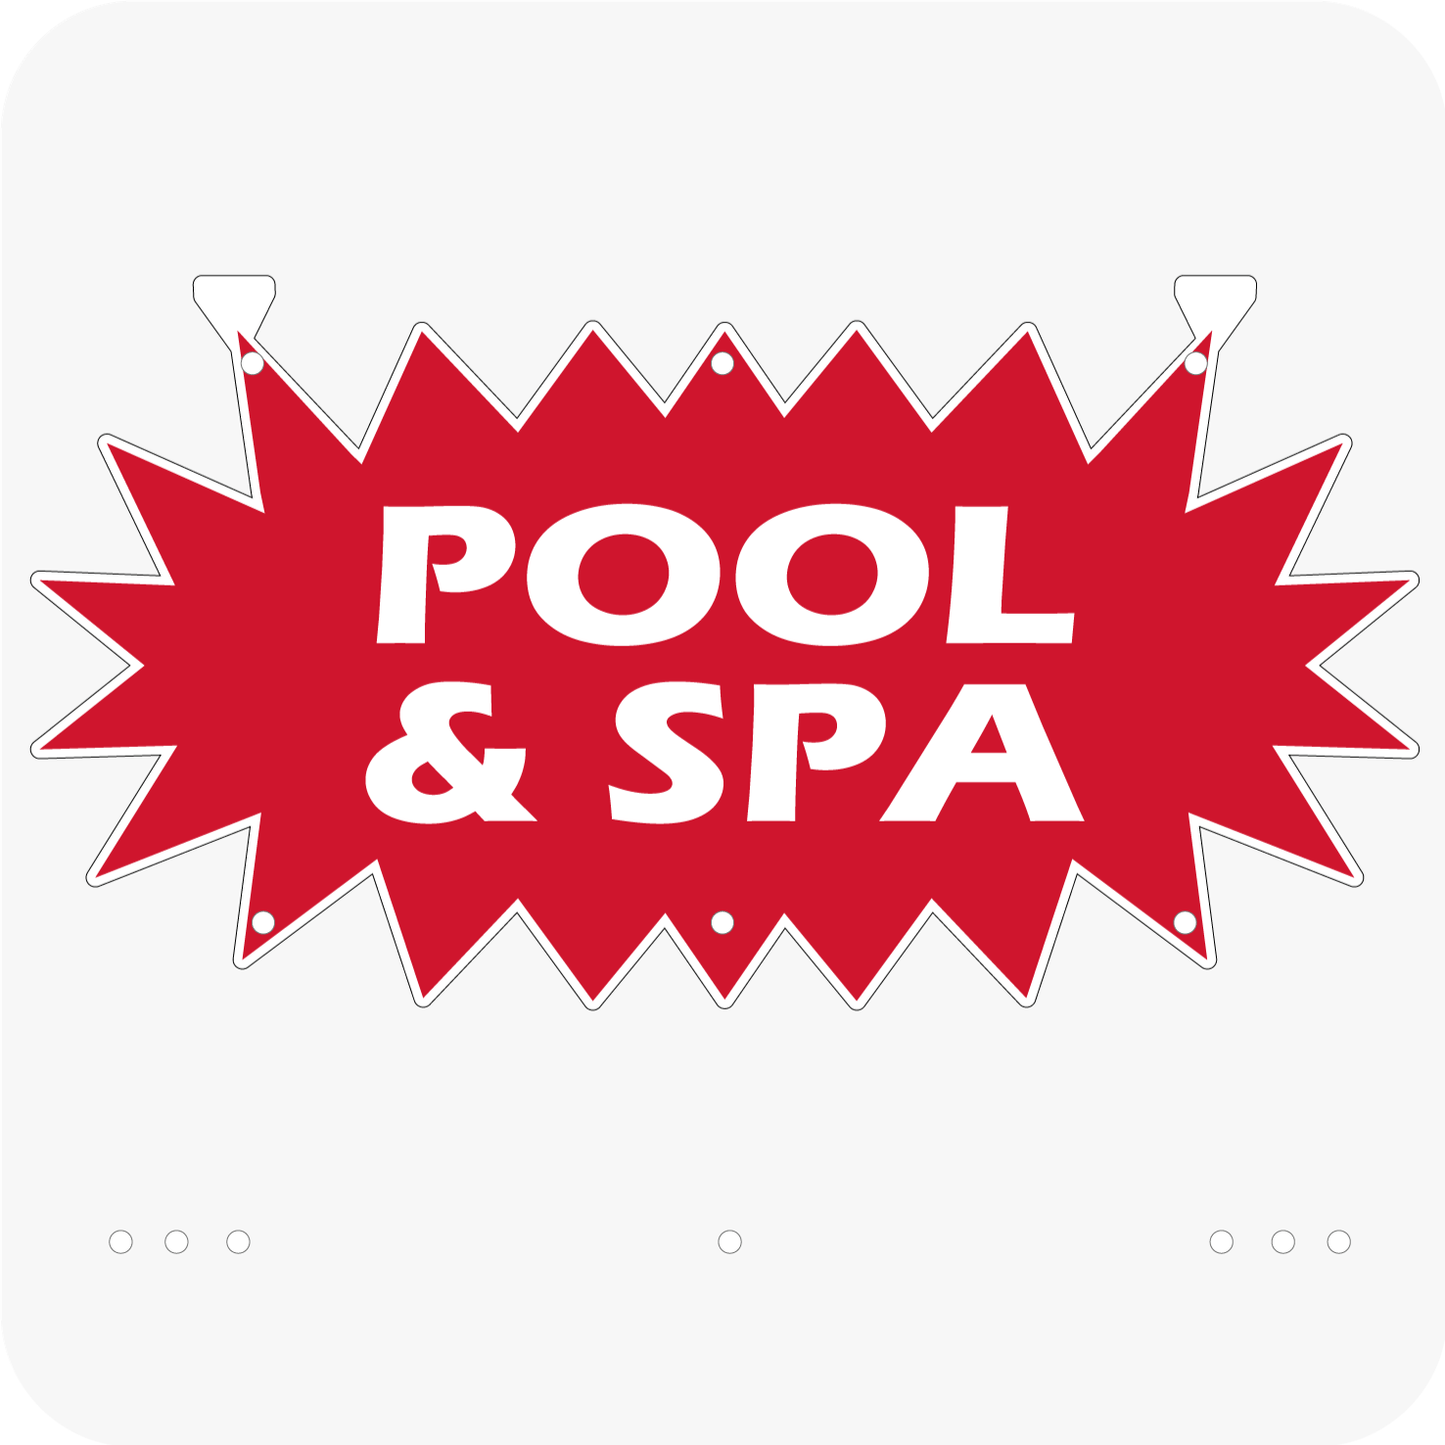 Pool & Spa 12 x 24 Corrugated Star Rider - Red